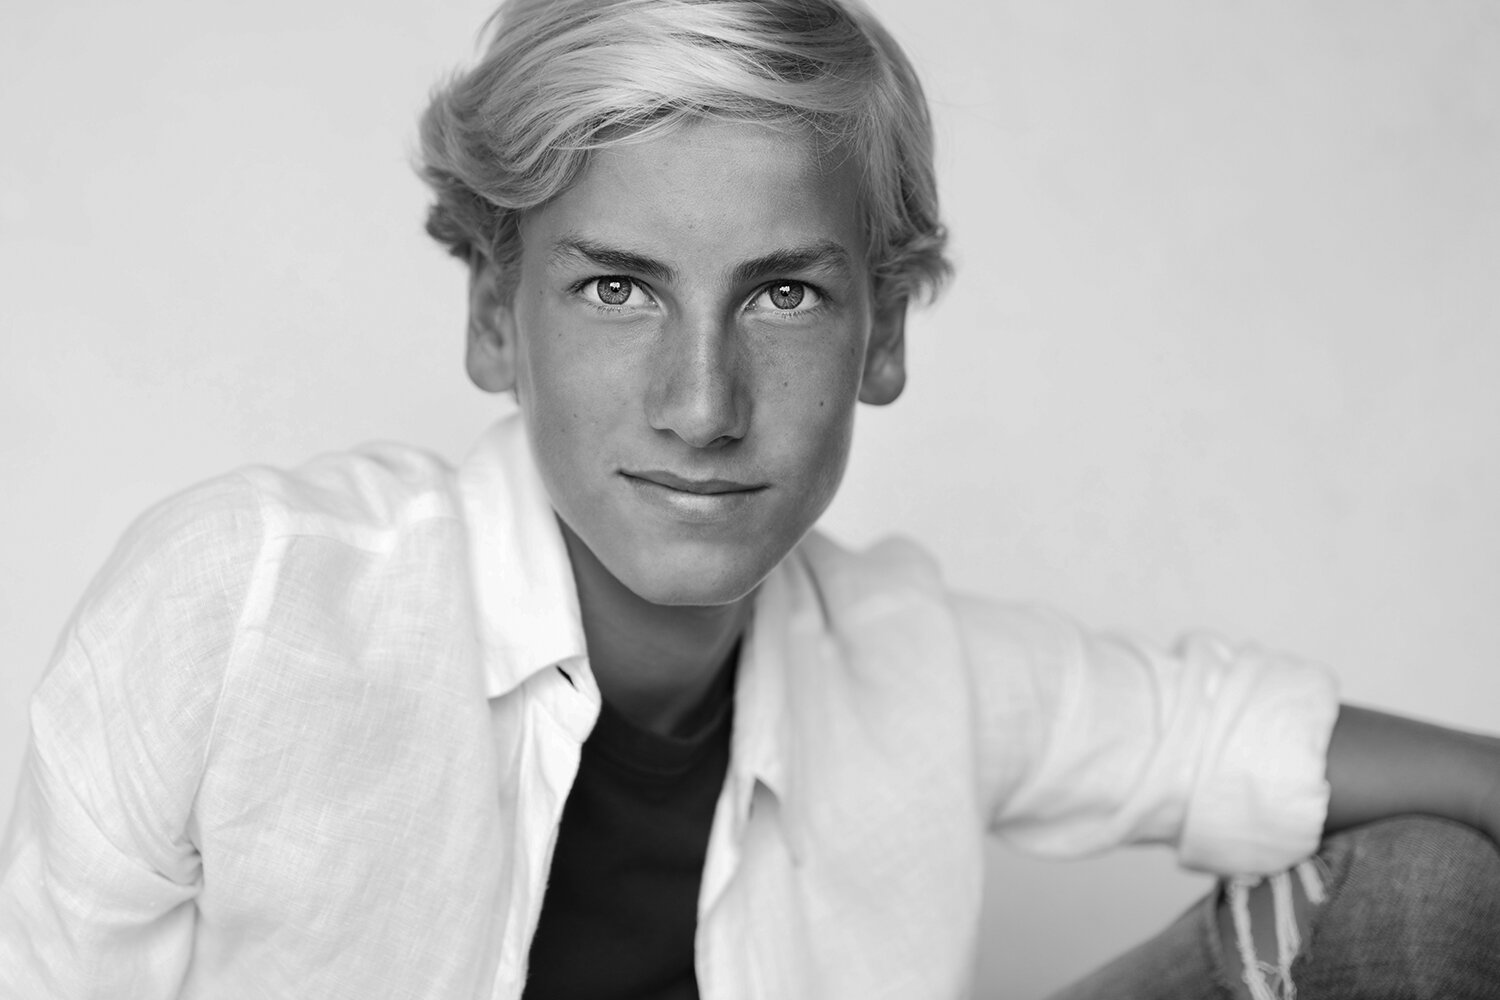 Model jonge man blond haar low res.jpg